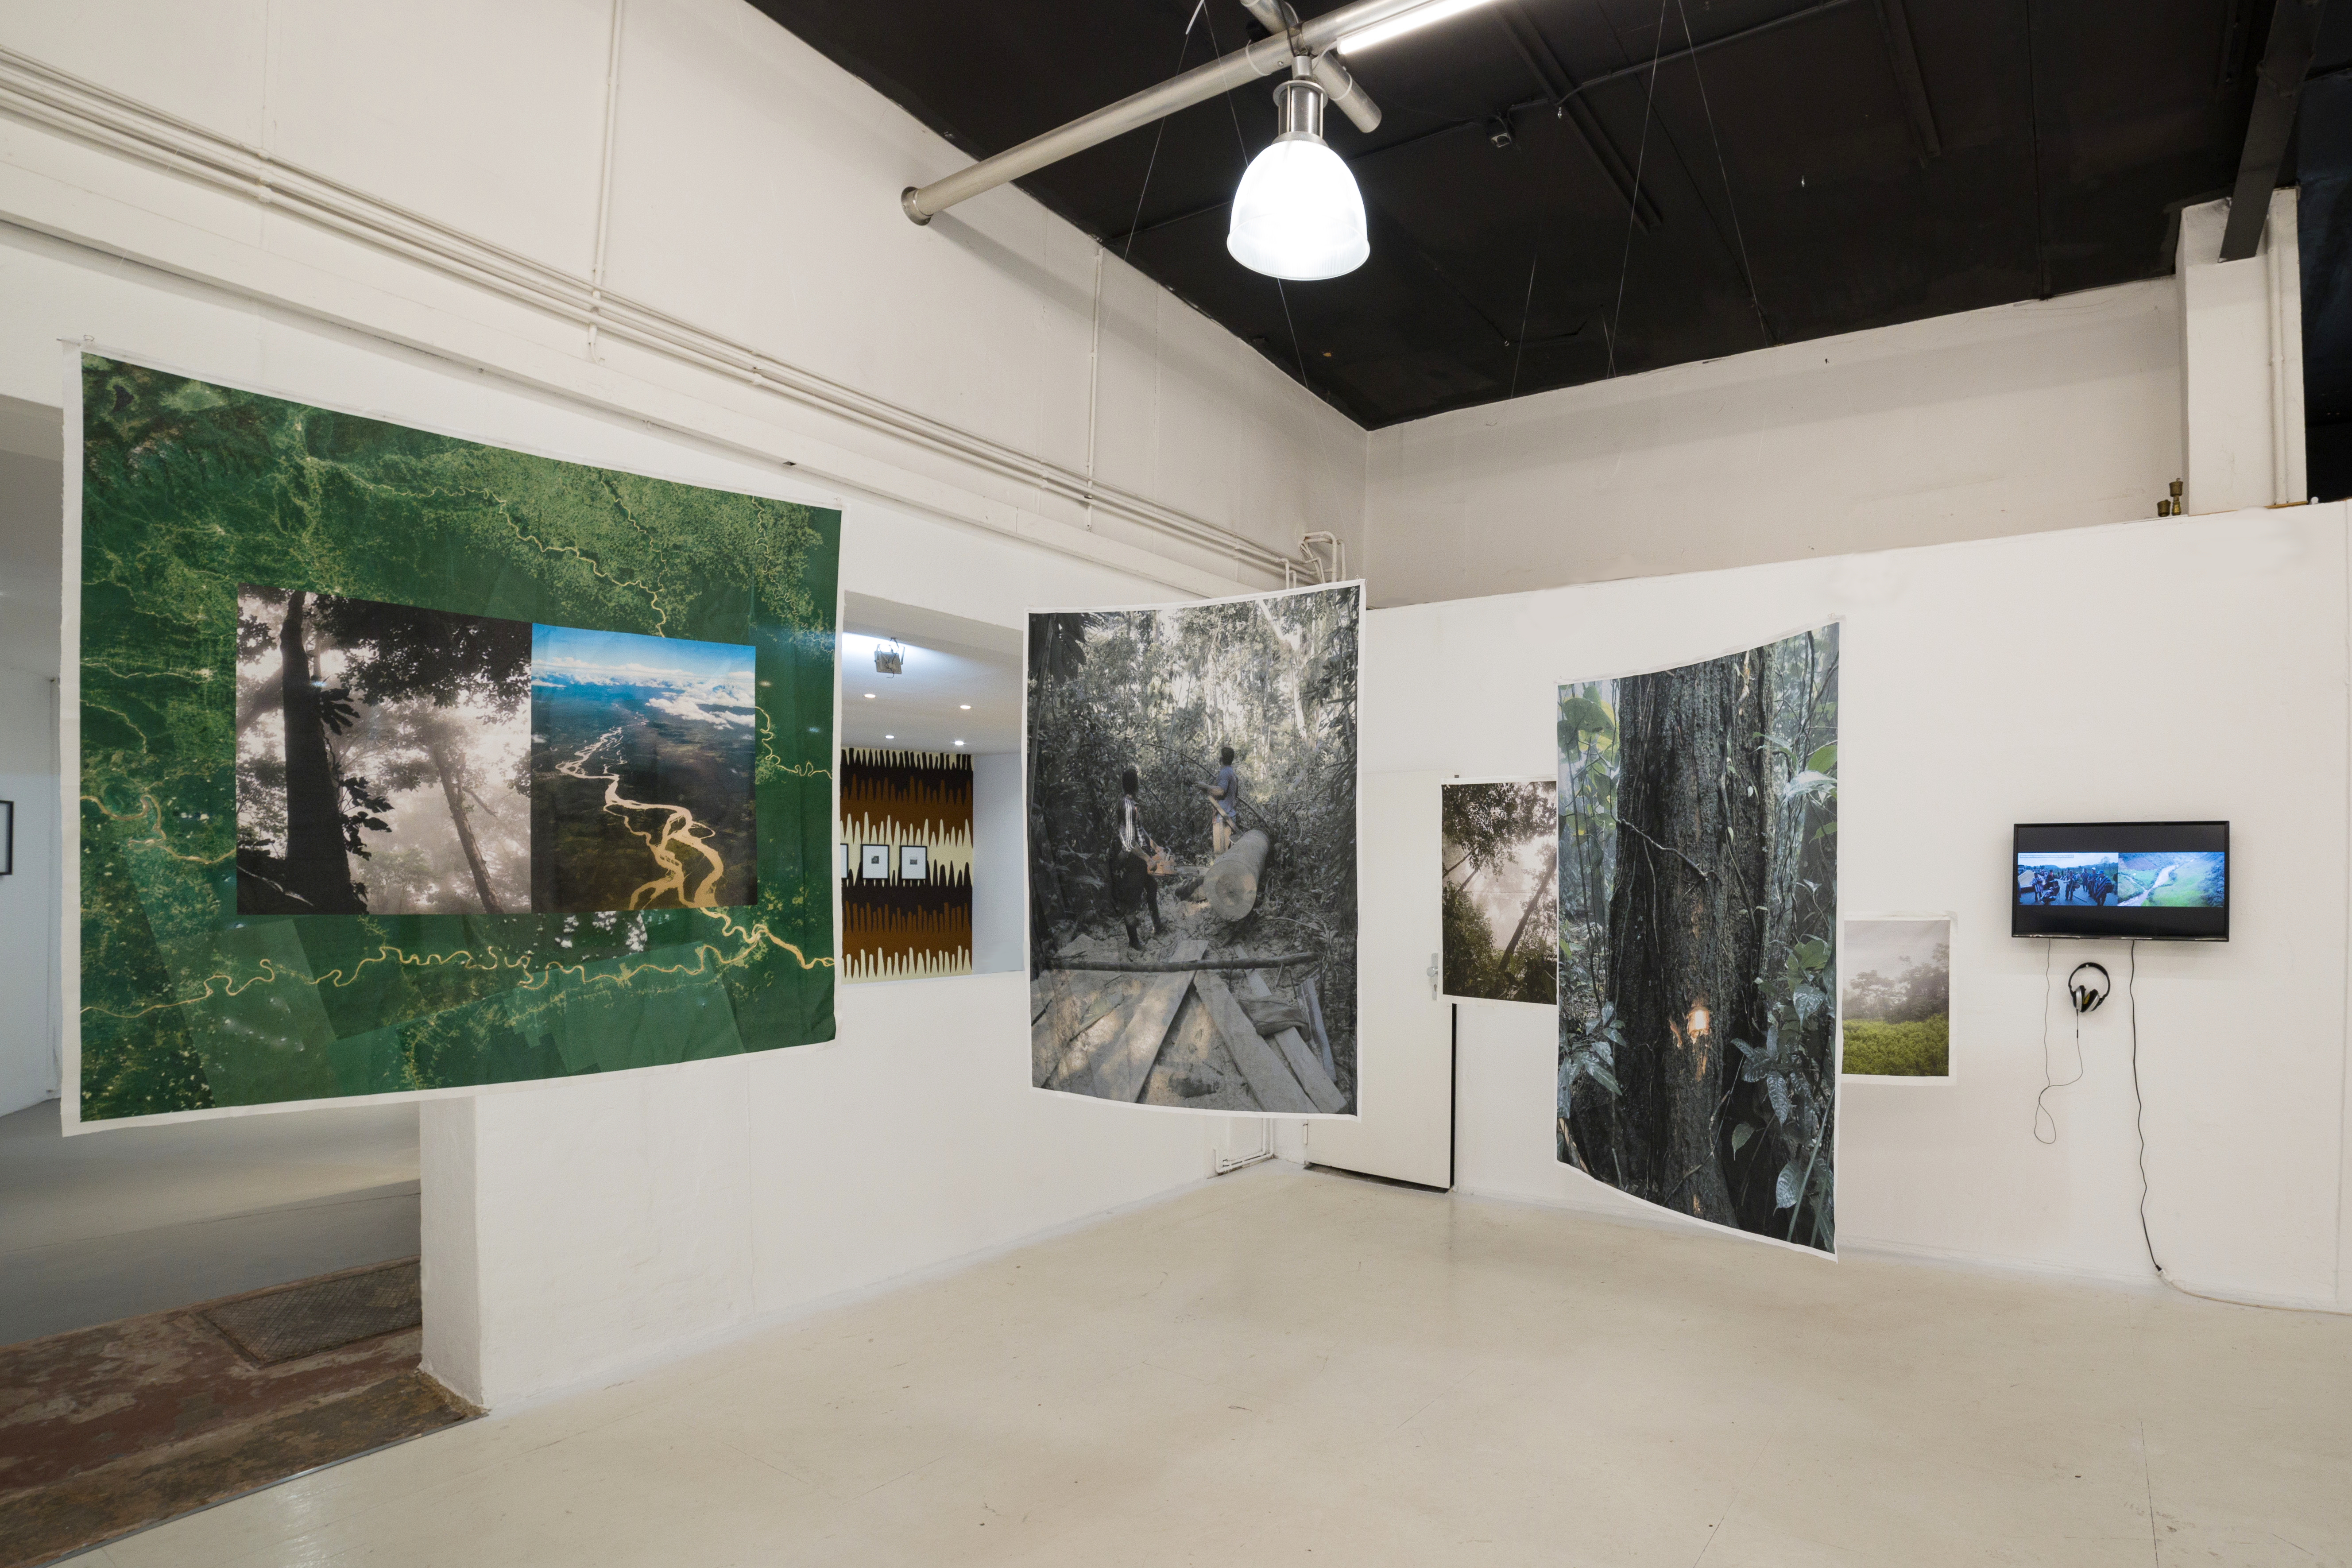 Exhibition Te de Bogota curated by Jorge Sanguino with Felipe Castelblanco his work Landscapes